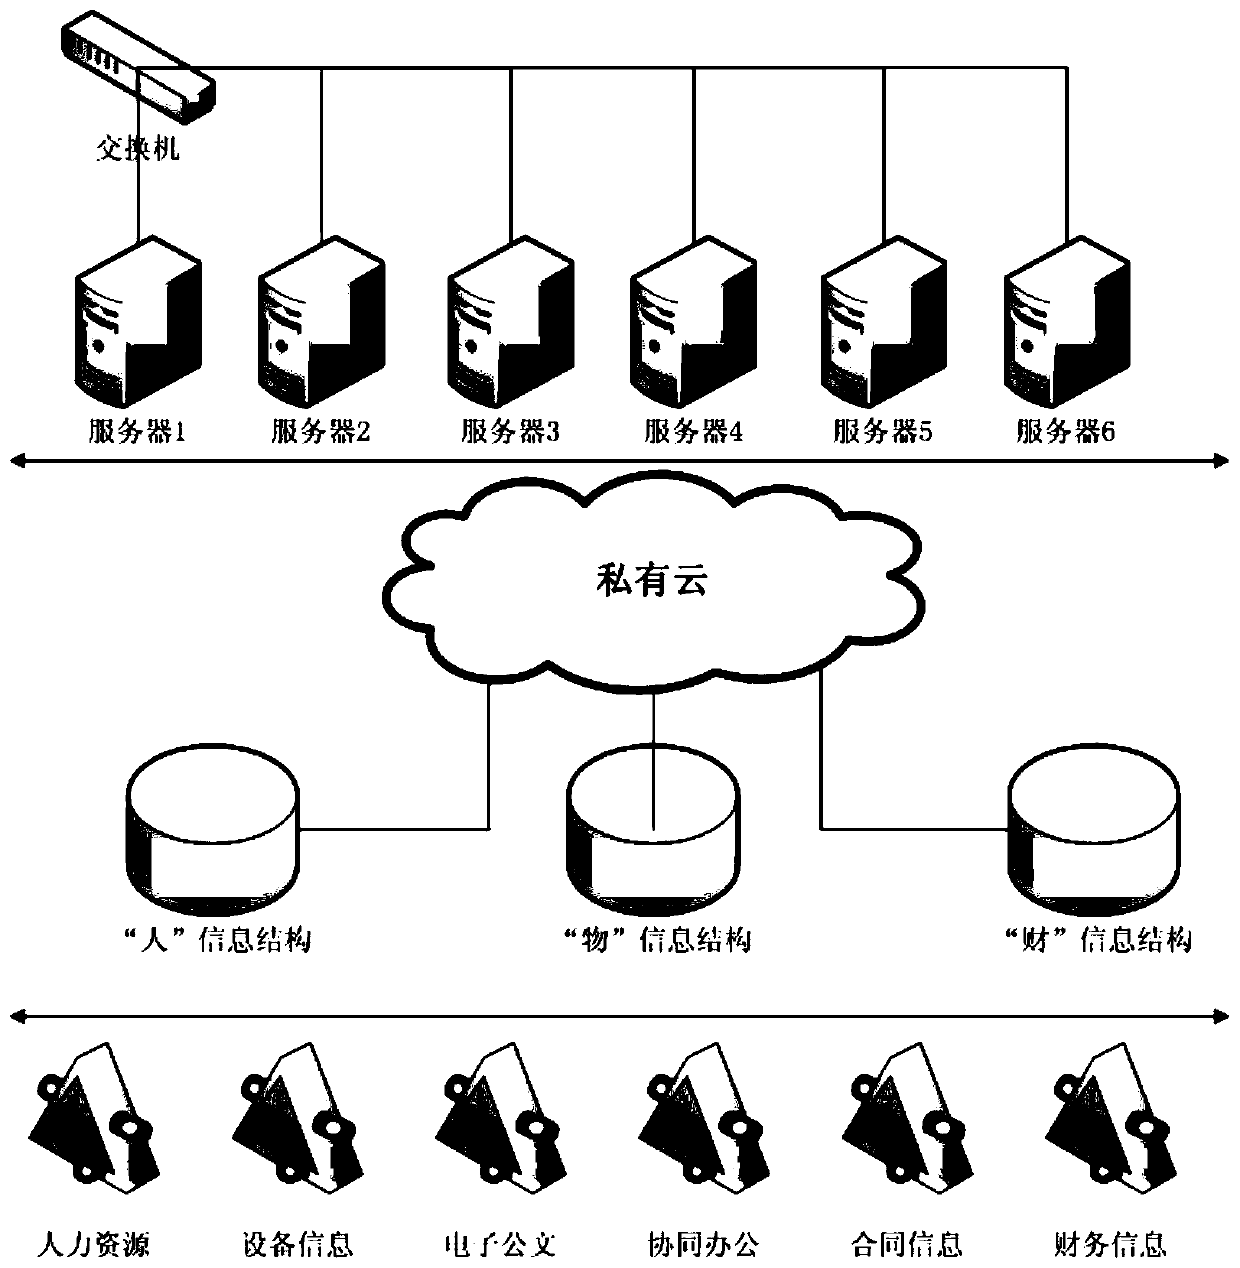 Enterprise management informatization system construction method based on private cloud